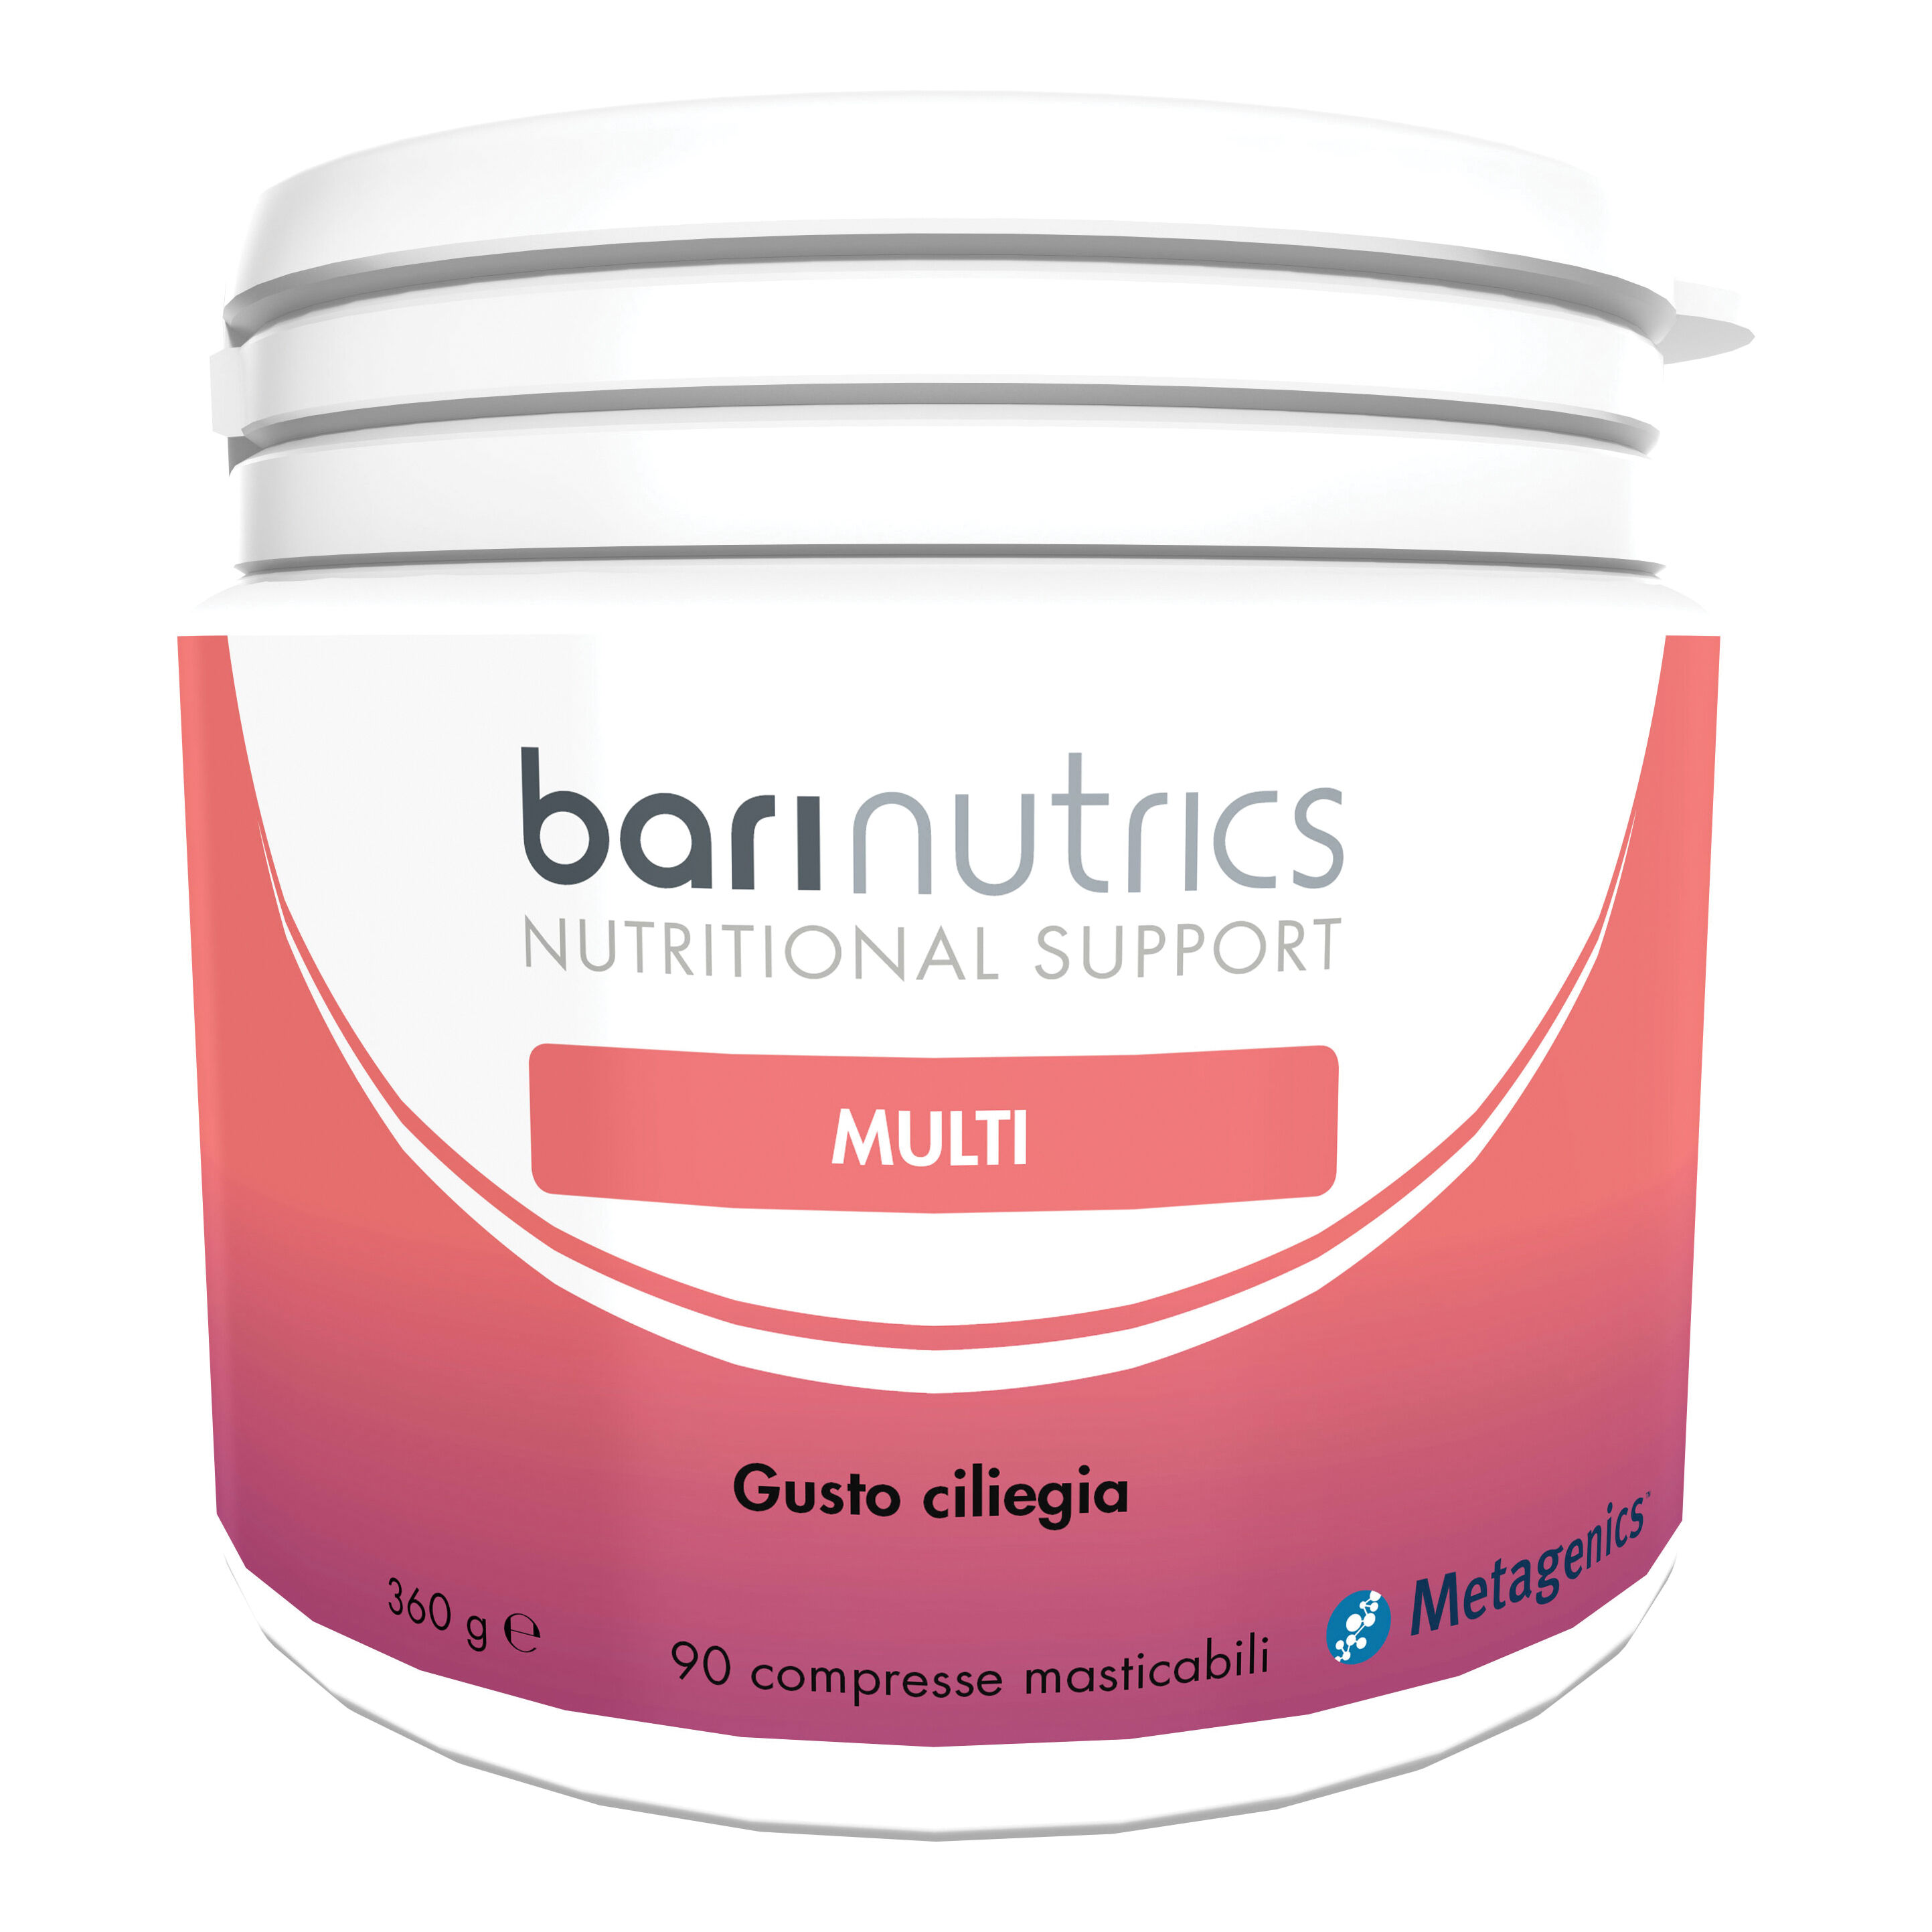 METAGENICS Barinutrics multi cil 90cpr